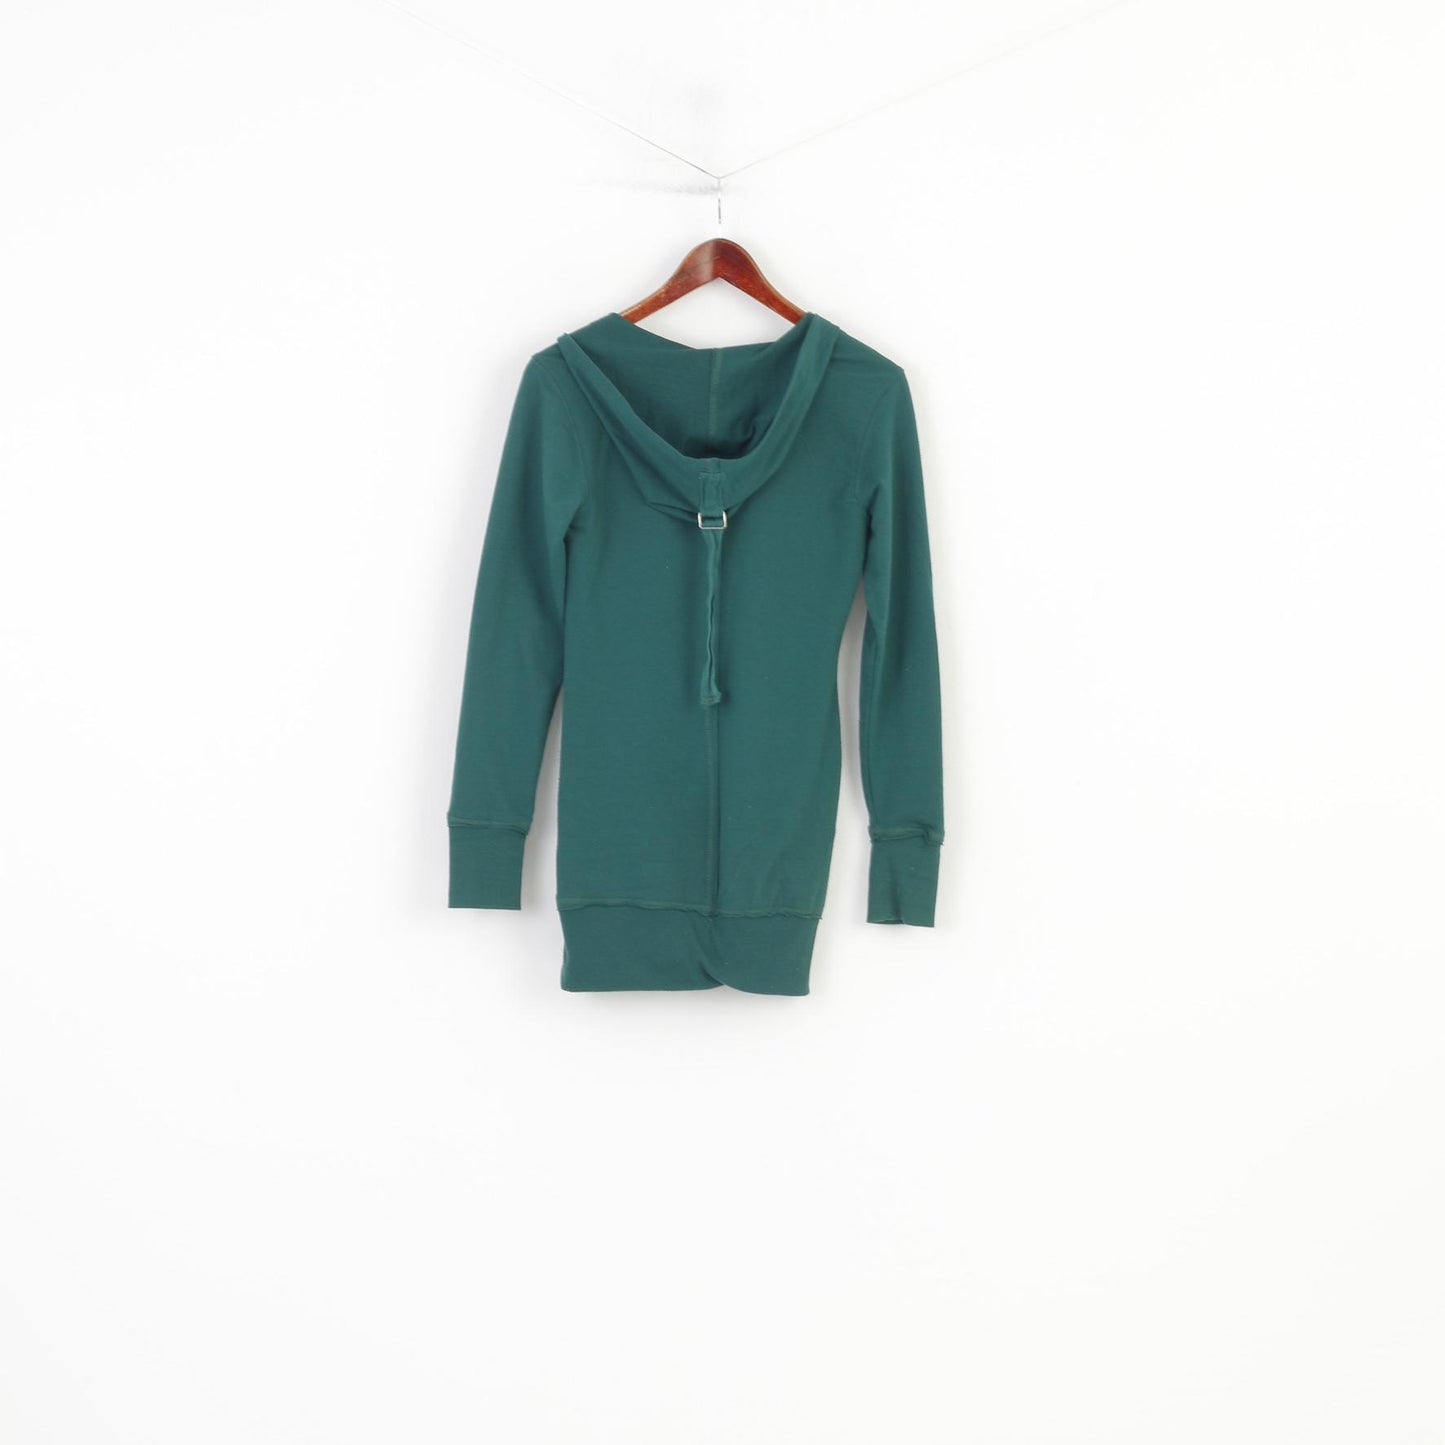 M.Elysse Women M Sweatshirt Green Hooded Long Tunic Kangaroo Pocket V Neck Vintage Top